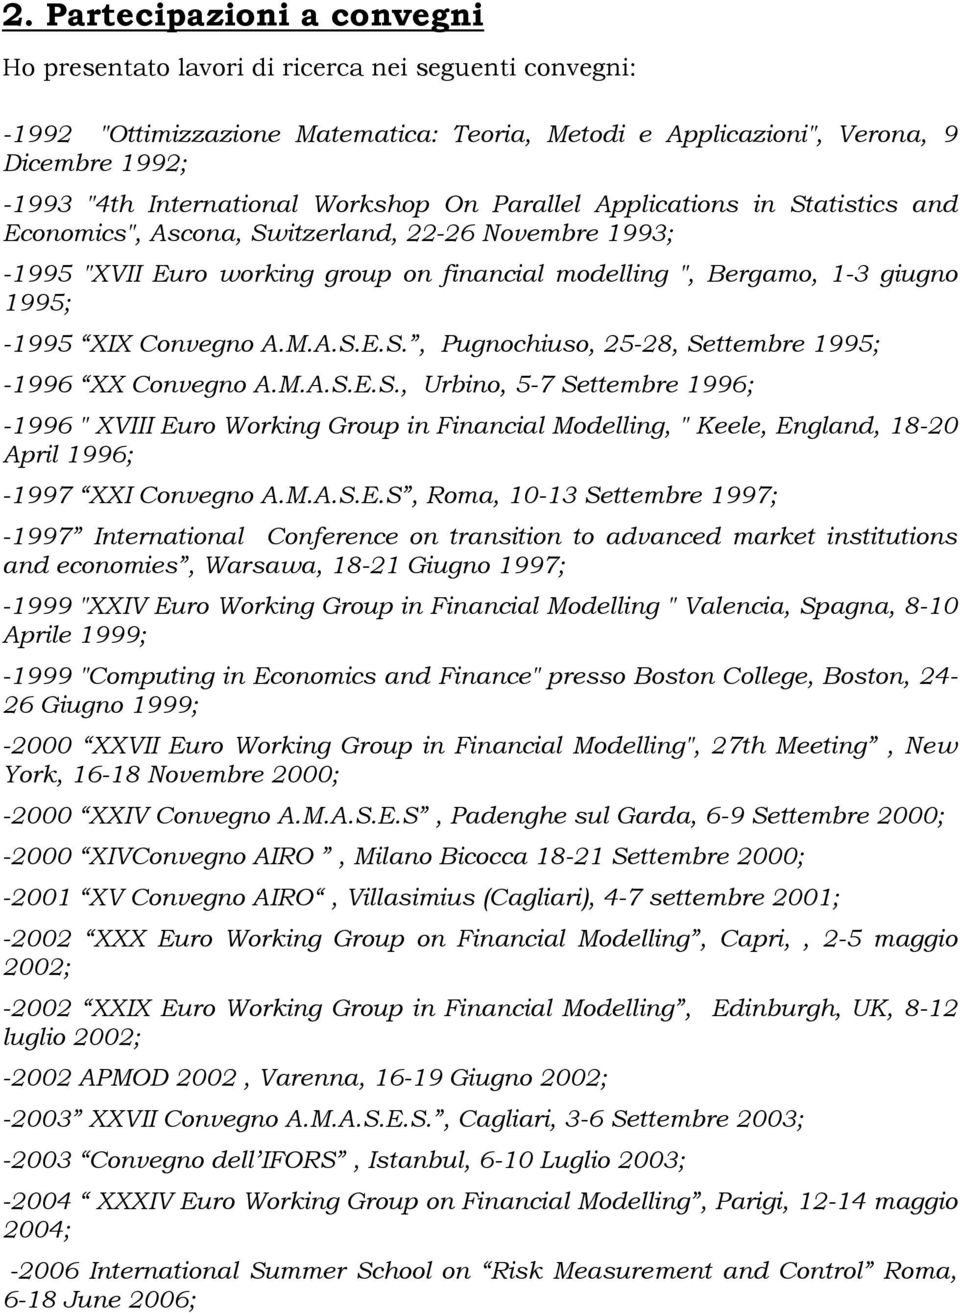 Convegno A.M.A.S.E.S., Pugnochiuso, 25-28, Settembre 1995; -1996 XX Convegno A.M.A.S.E.S., Urbino, 5-7 Settembre 1996; -1996 " XVIII Euro Working Group in Financial Modelling, " Keele, England, 18-20 April 1996; -1997 XXI Convegno A.